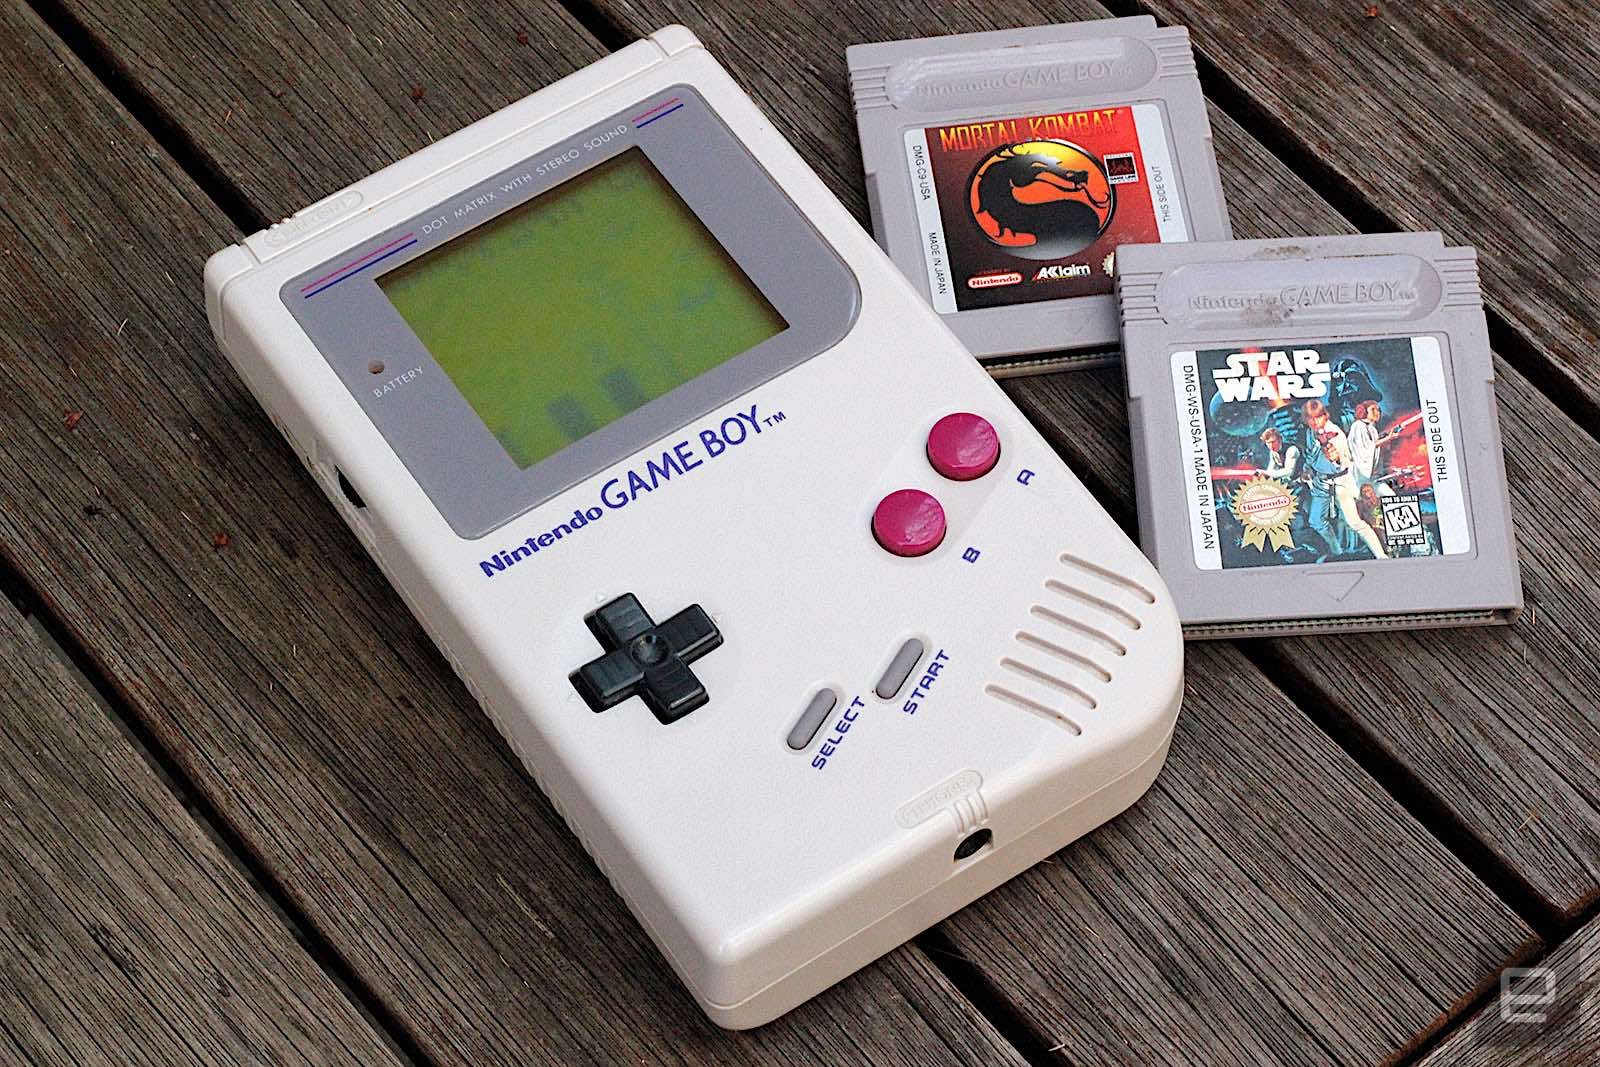 Console Game Boy.